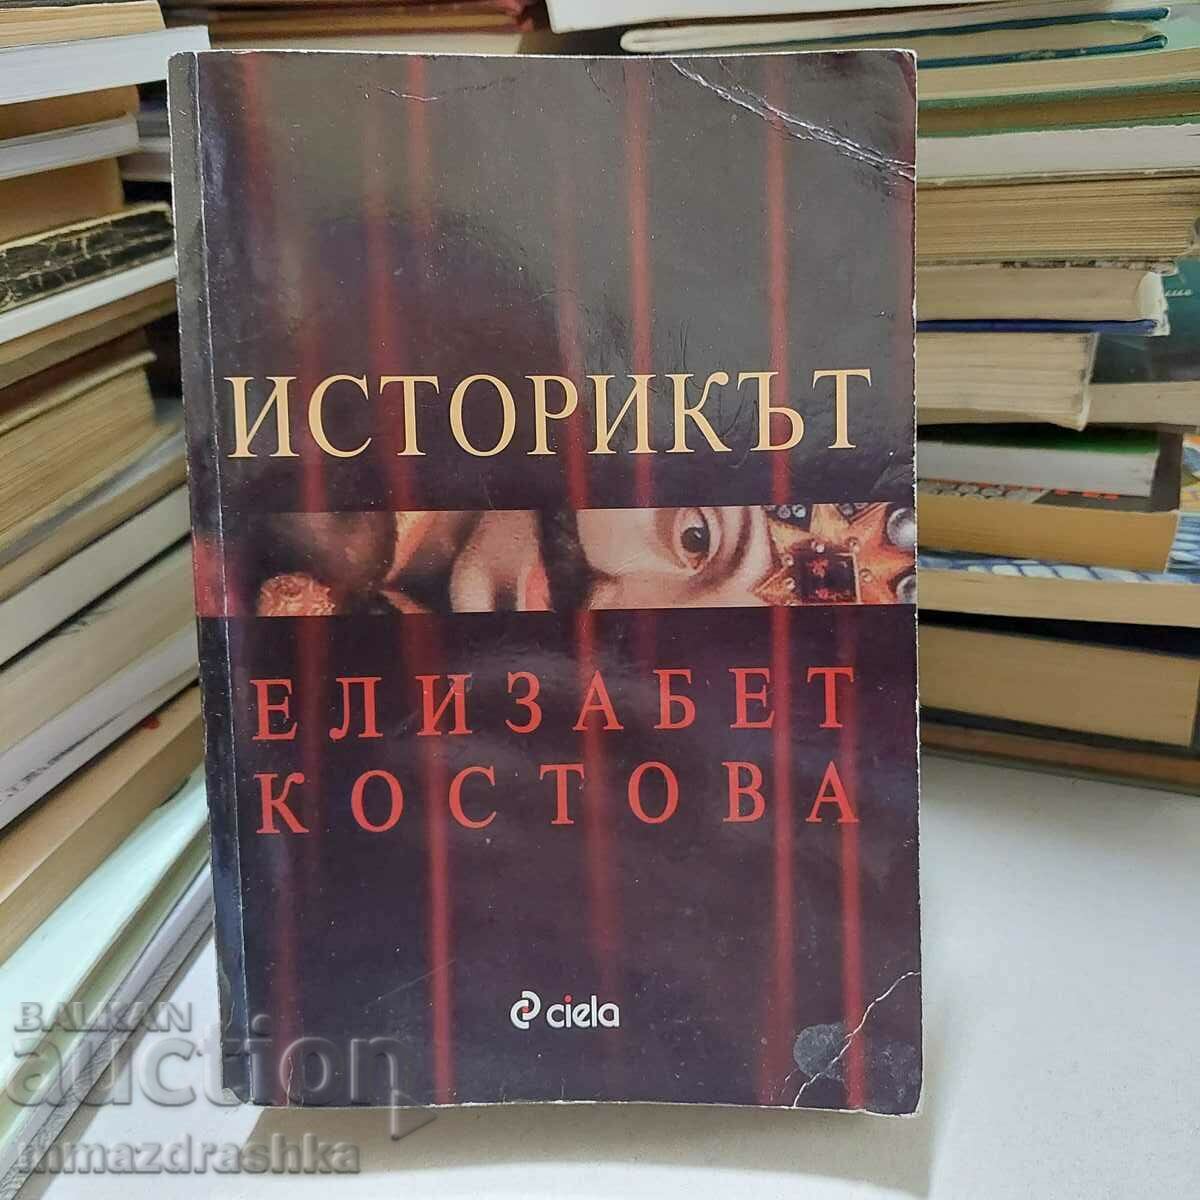 The historian, Elizabeth Kostova